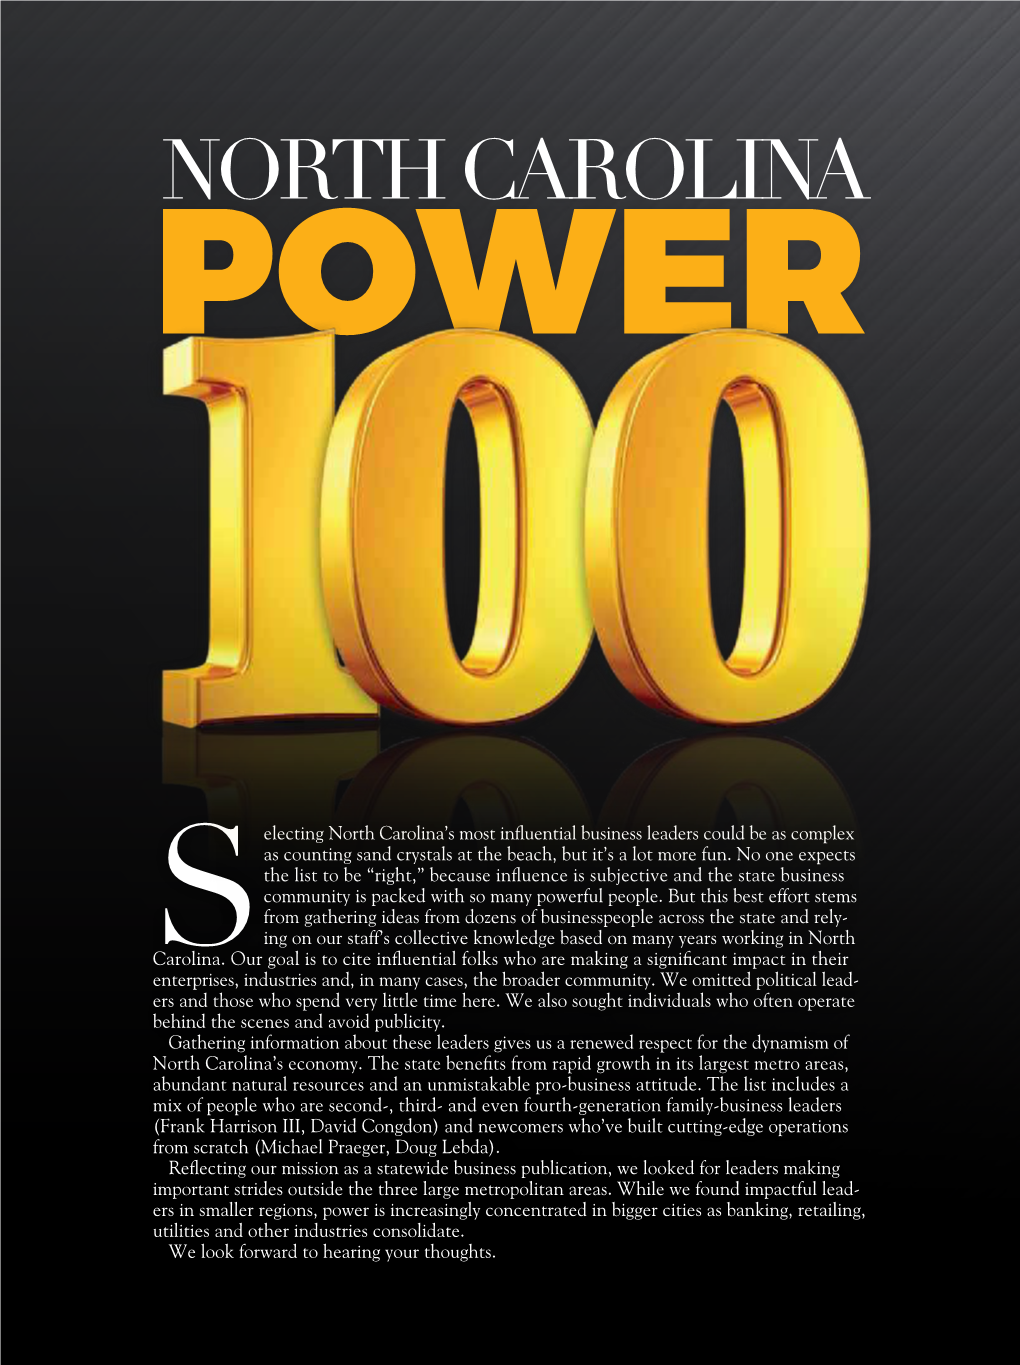 Power-100 Feb18 Lr.Pdf